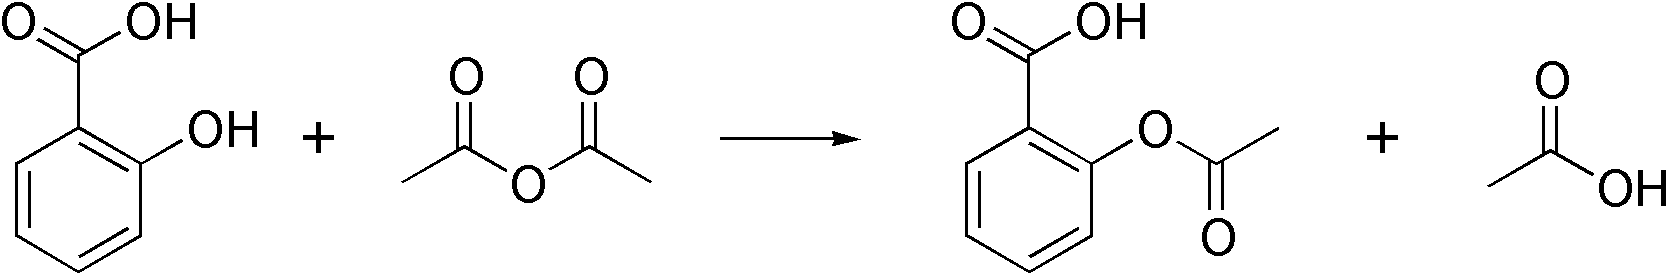 synthesis of salicylic acid